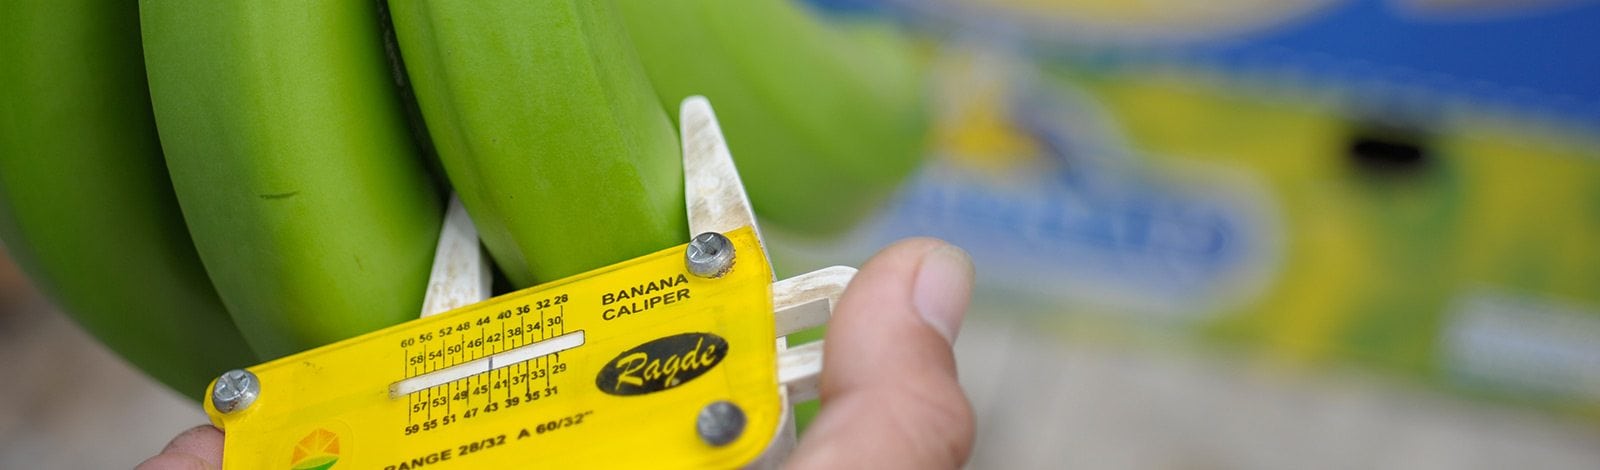 El Banano Organico - SPANISH - Sabrostar